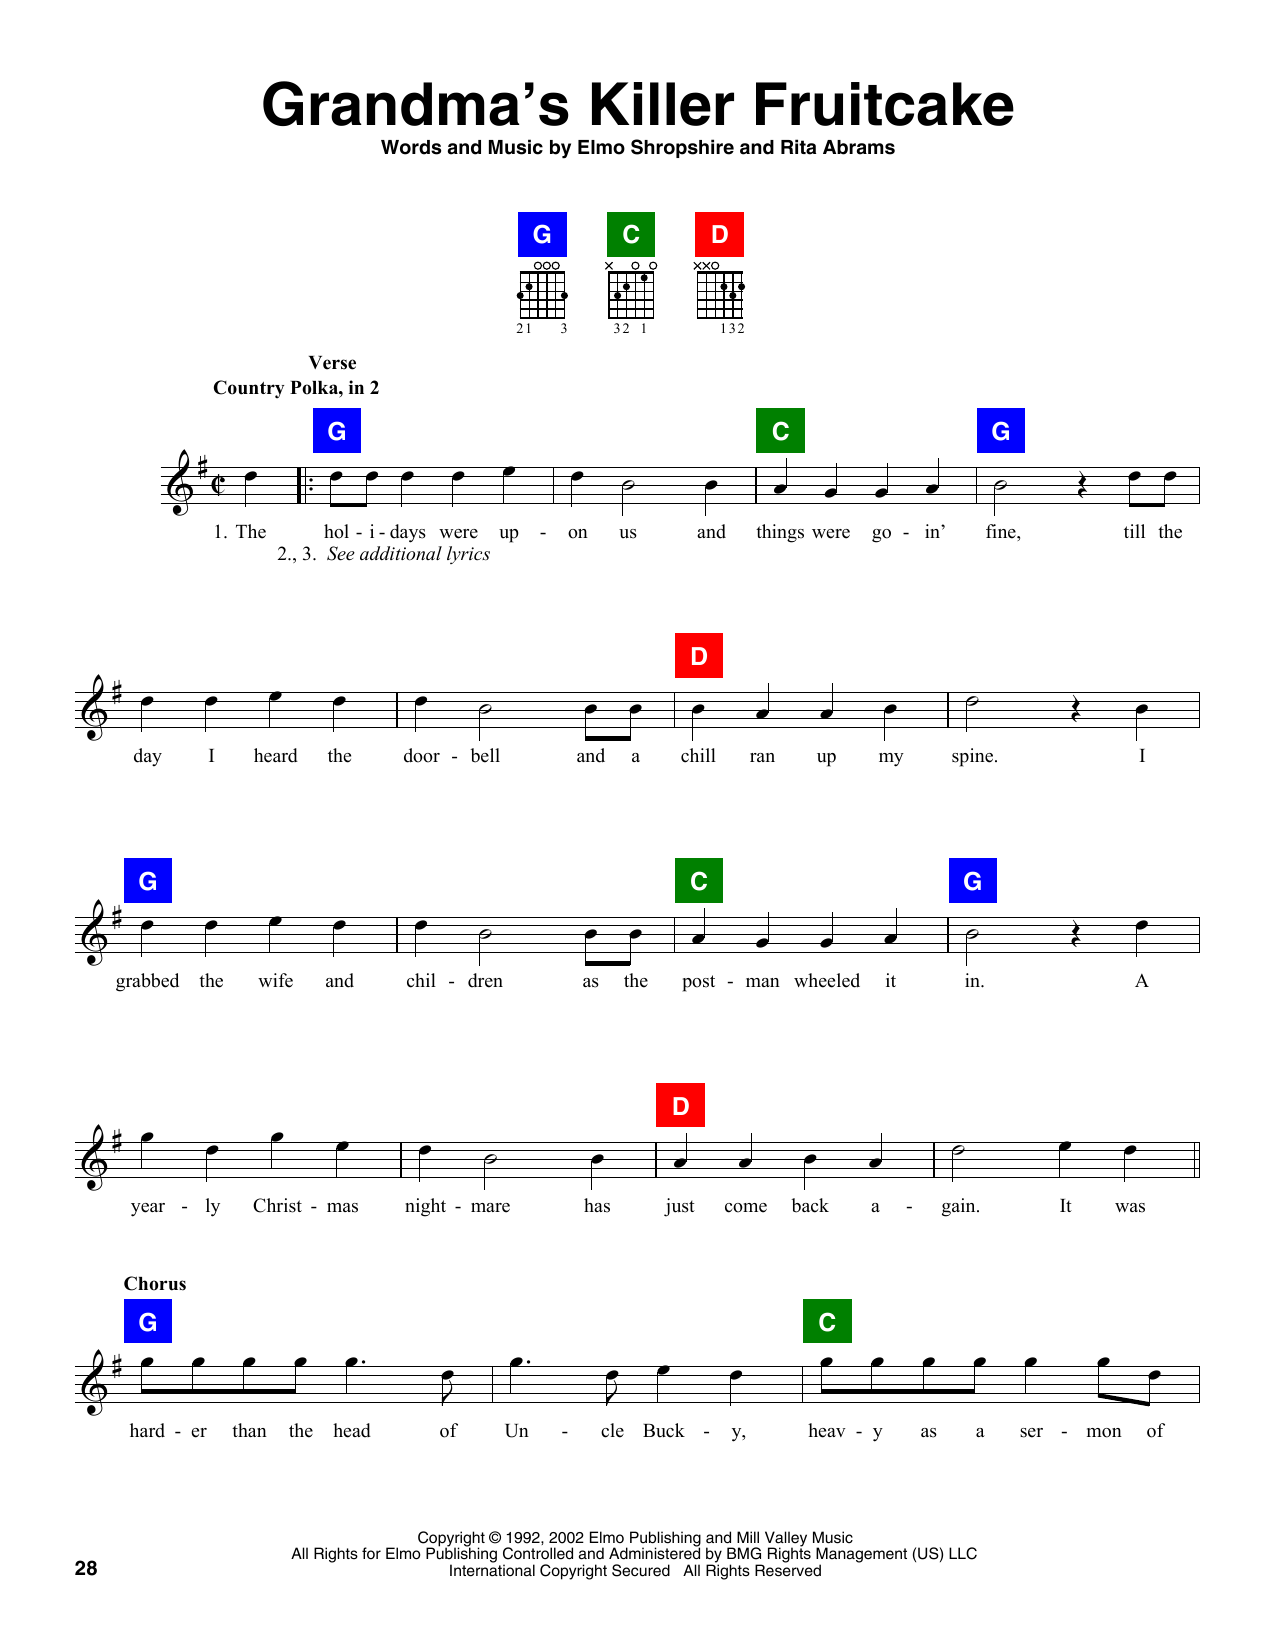 Elmo Shropshire Grandma's Killer Fruitcake Sheet Music Notes & Chords for Alto Saxophone - Download or Print PDF